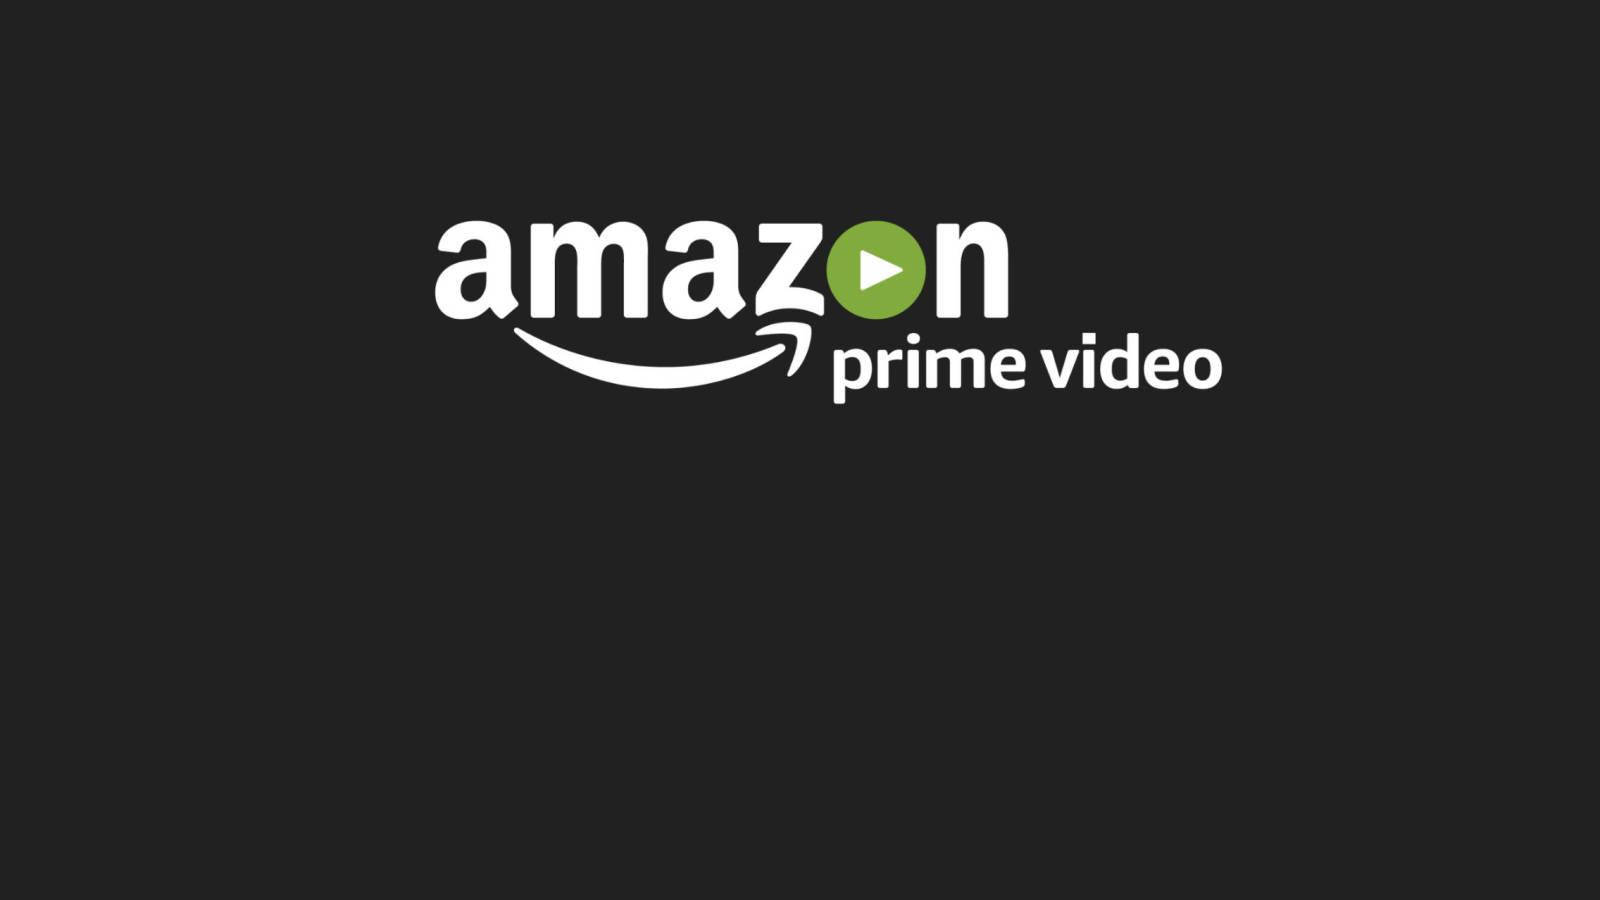 Amazon Prime Video Black Wallpaper